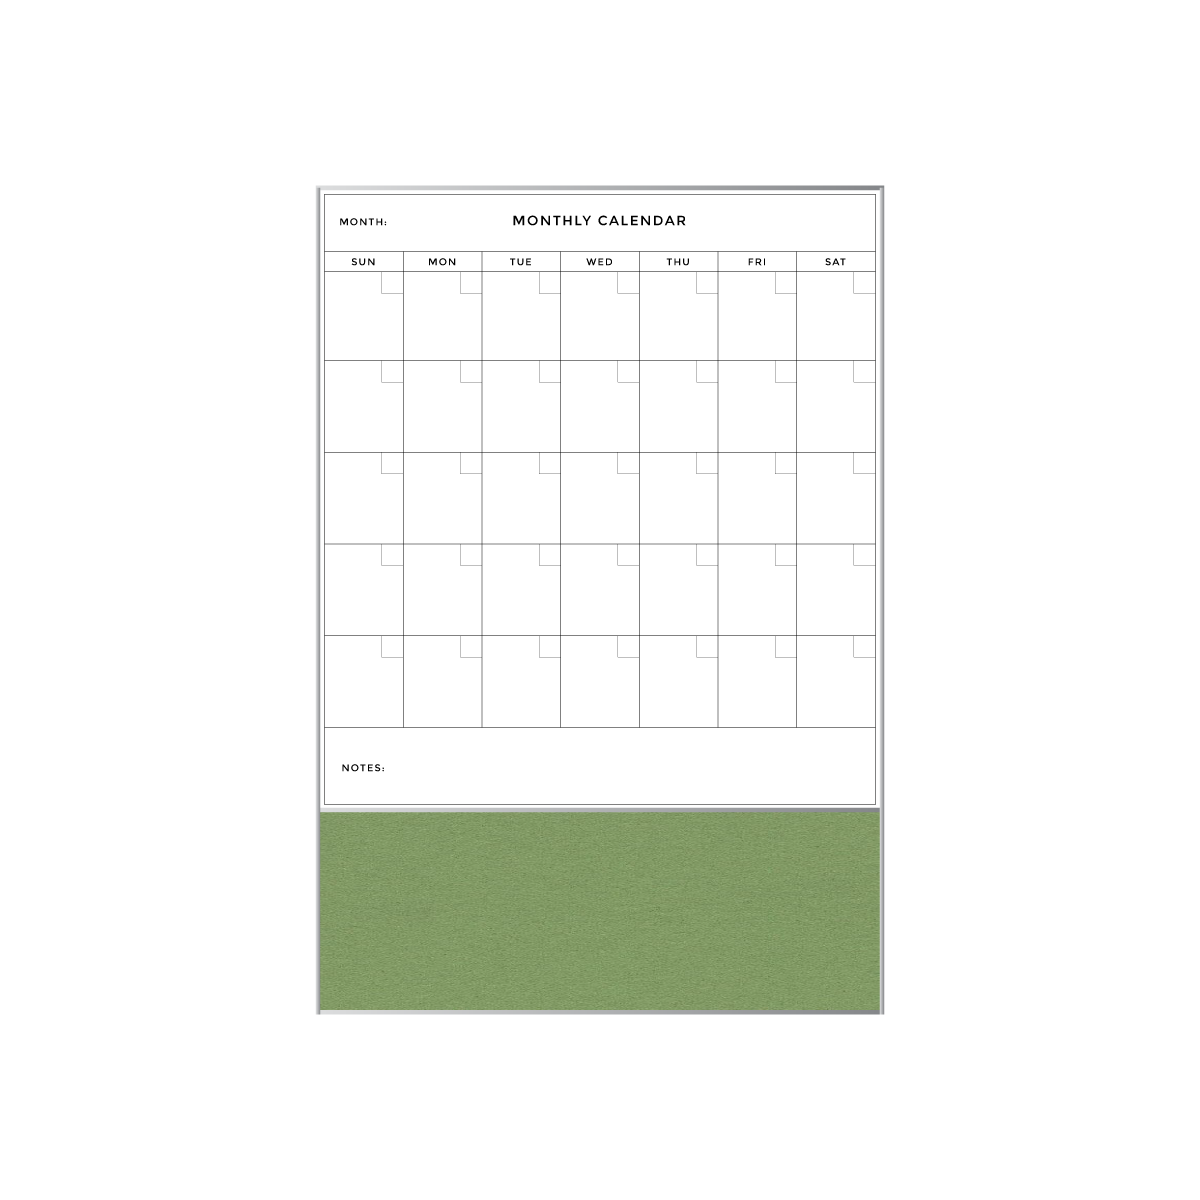 Combination Monthly Calendar | Baby Lettuce FORBO | Satin Aluminum Minimalist Frame Portrait